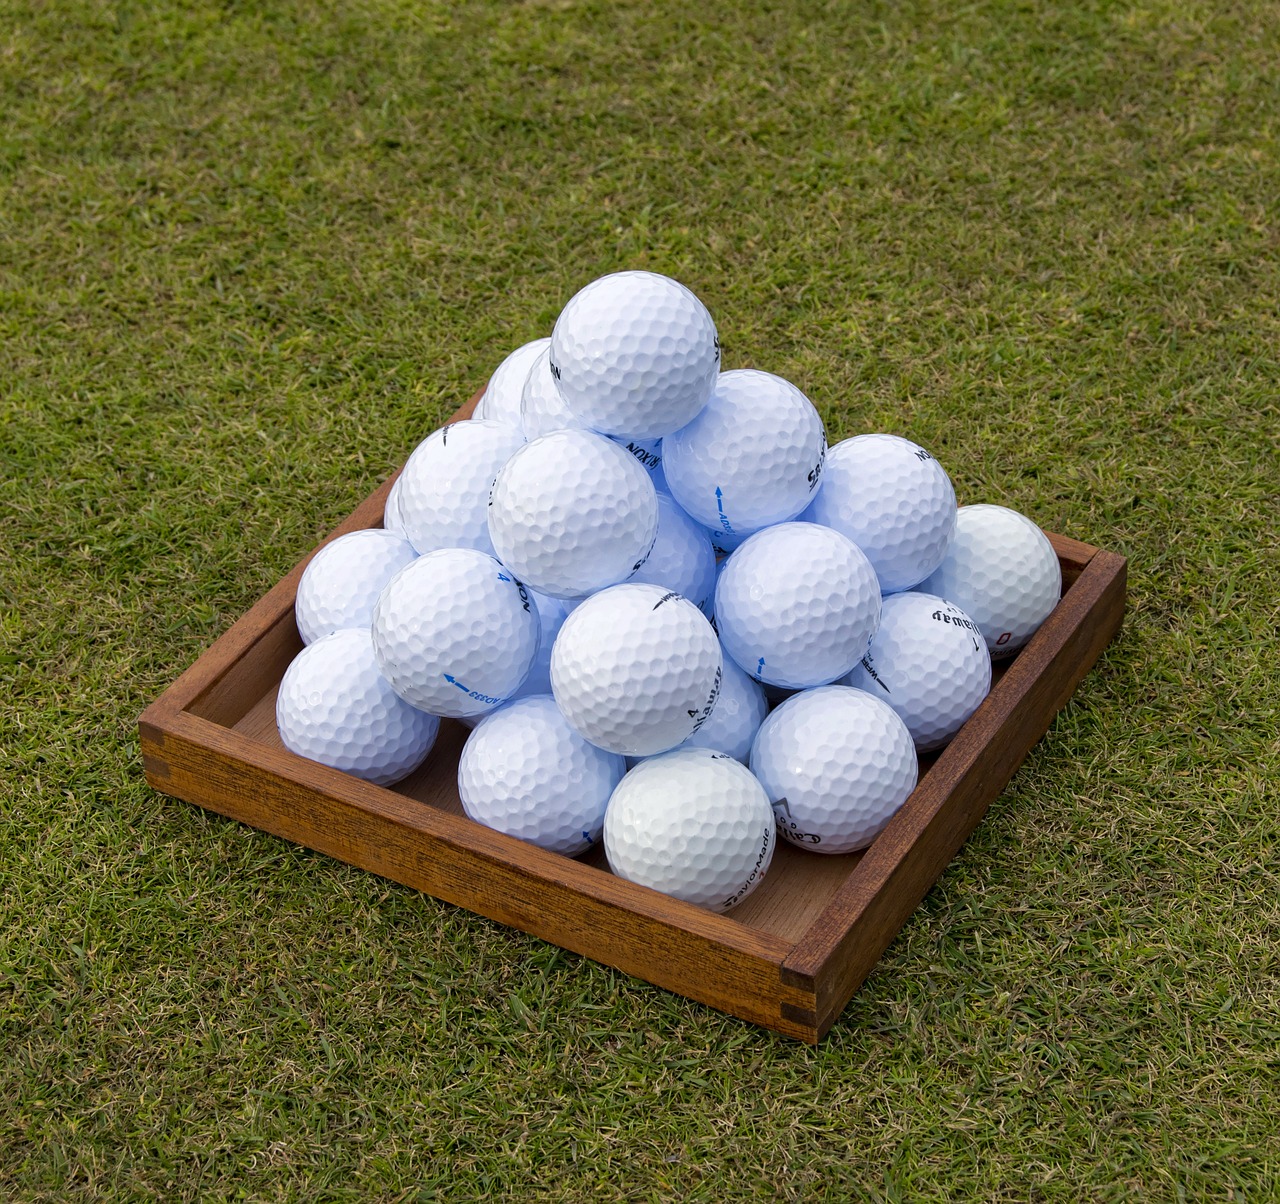 todd murner golf balls